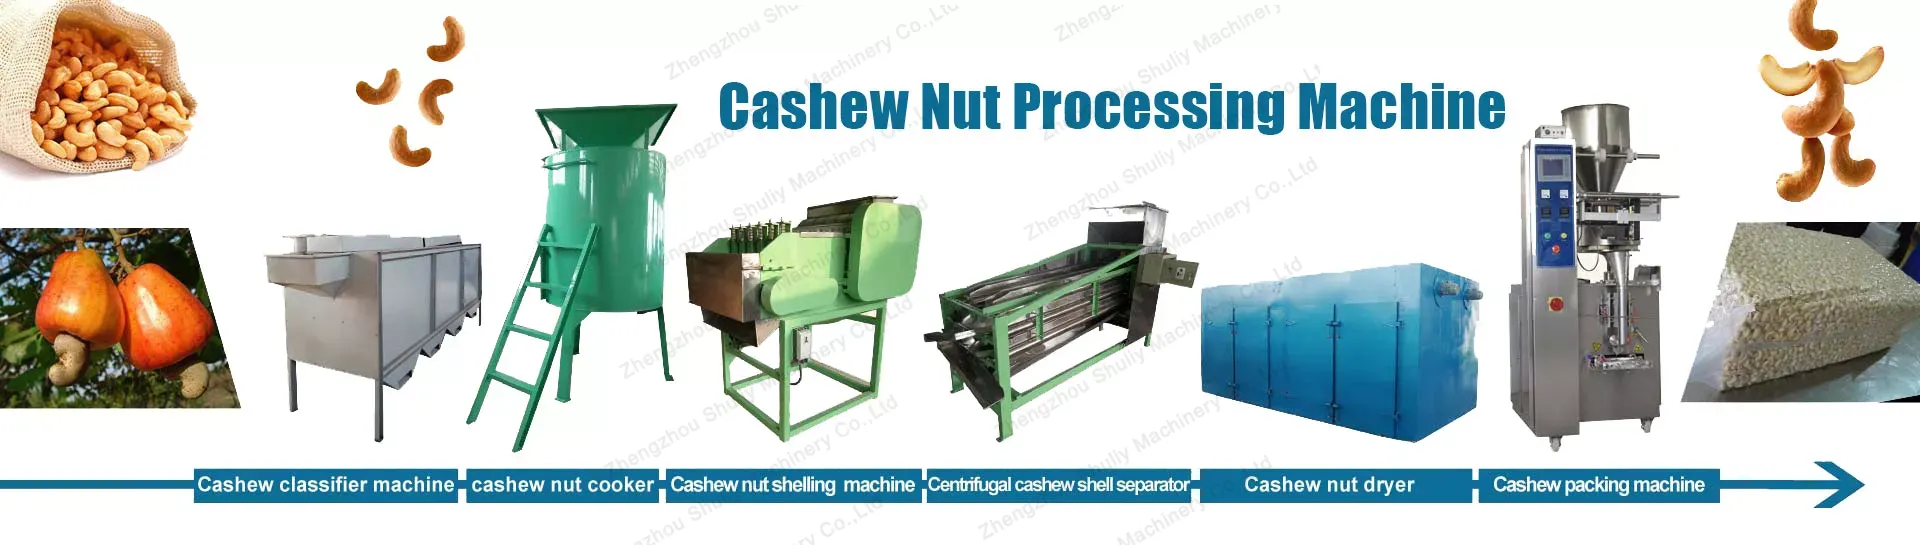 Cashew nut processing machine manufacturer